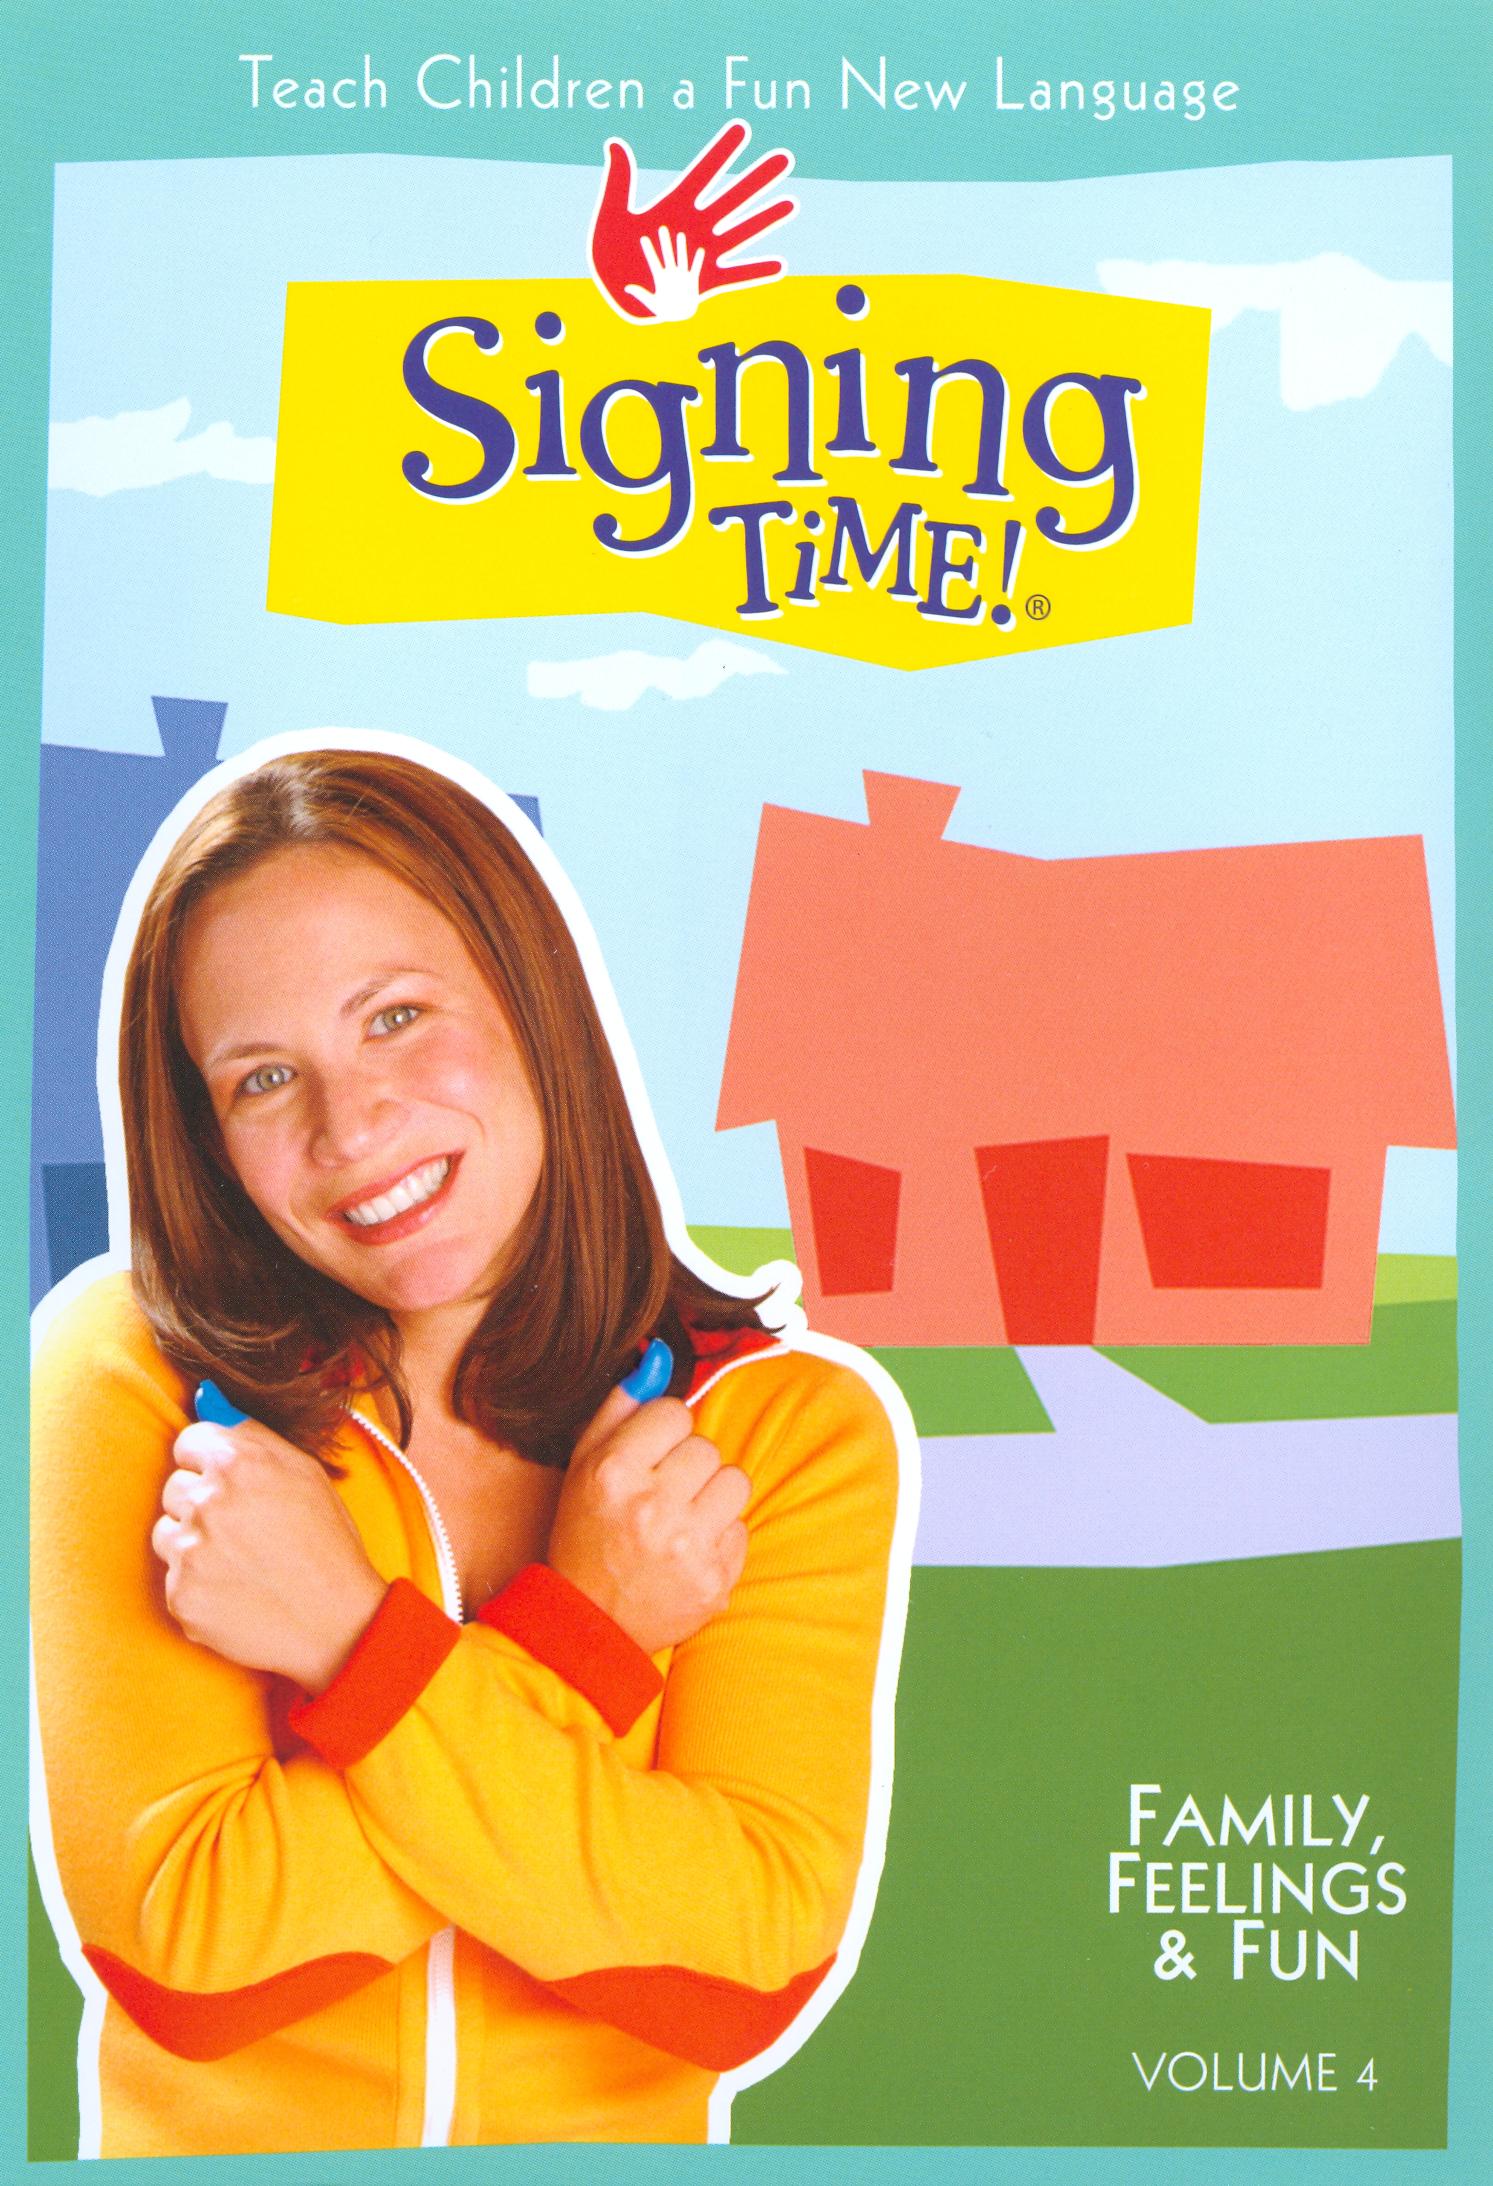 Best Buy: Signing Time!, Vol. 4: Family, Feelings & Fun [DVD] [2004]